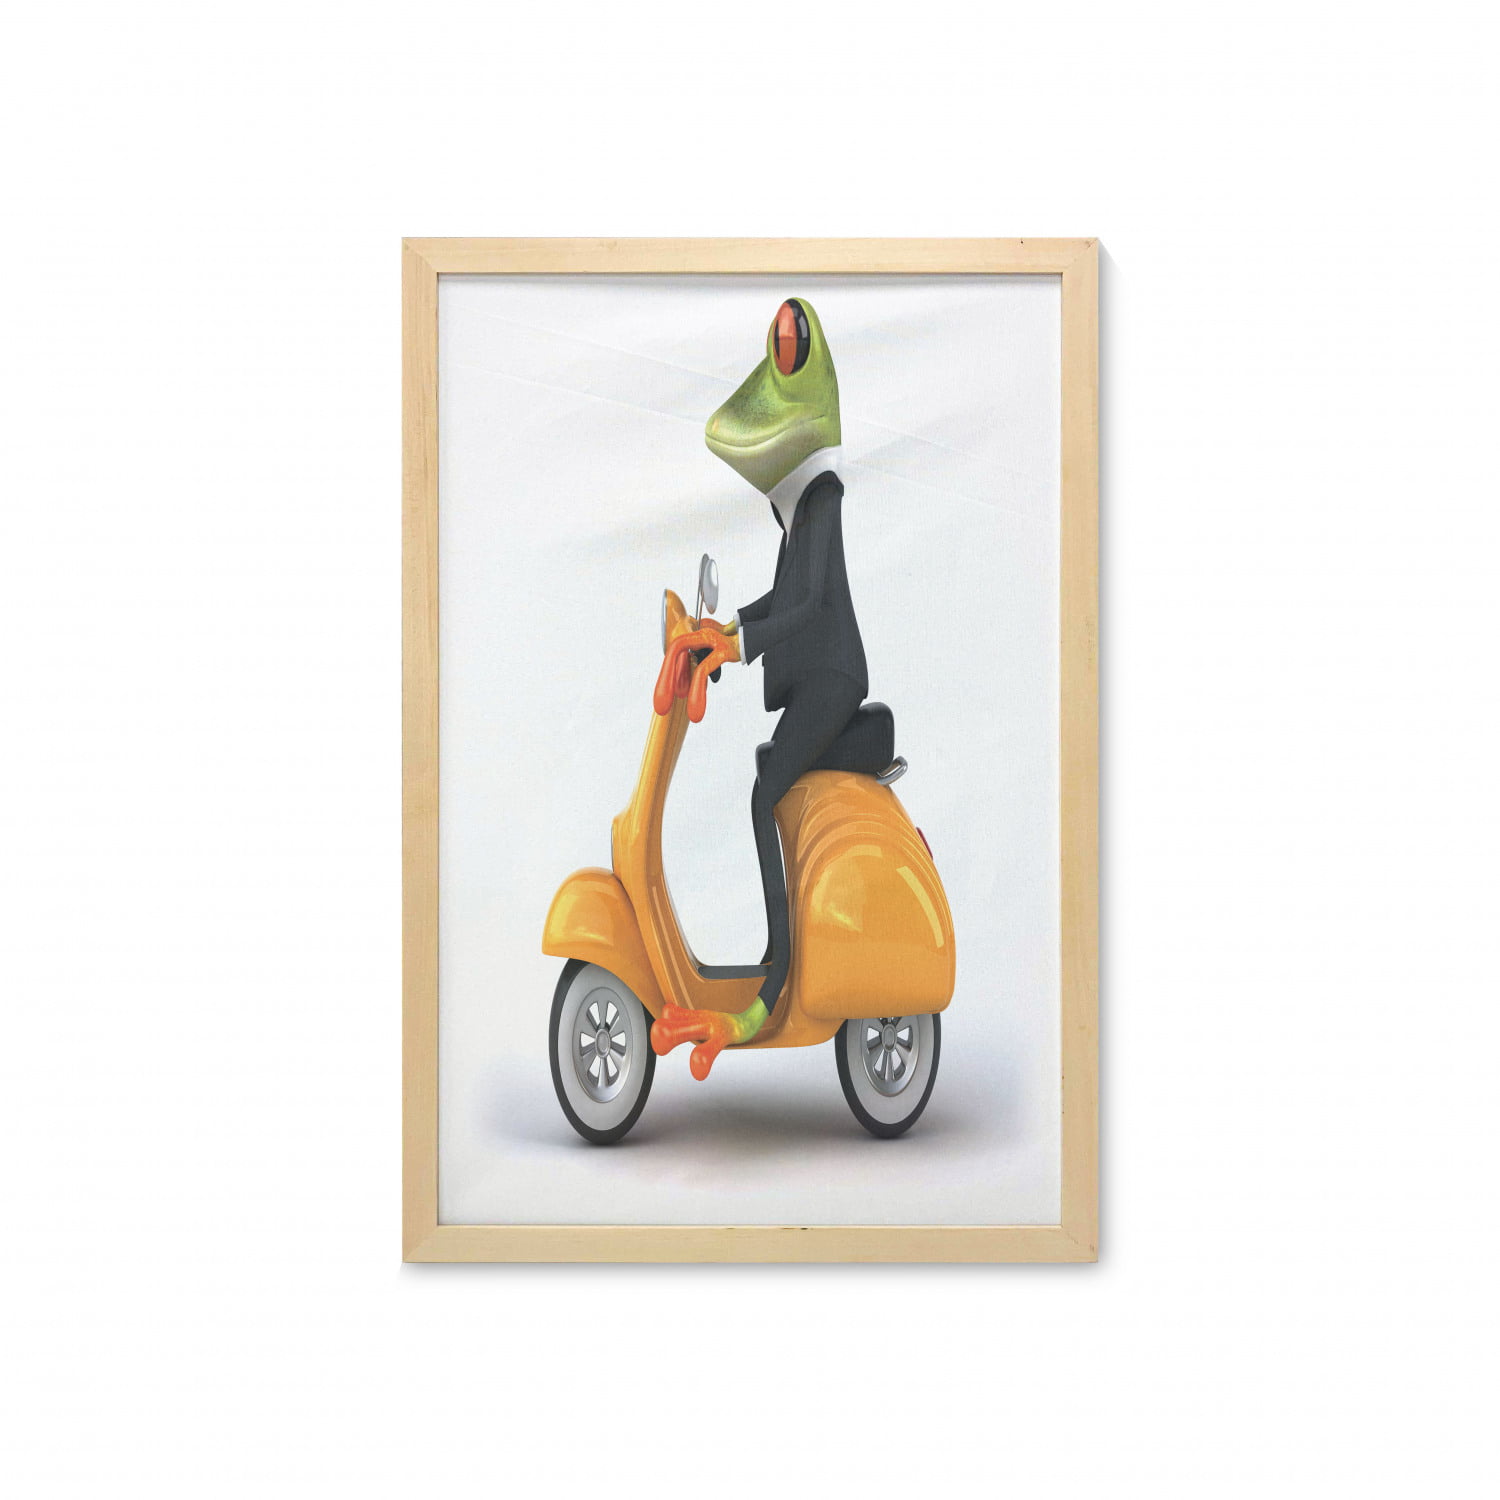 12x15-10 Animal Decor canvas messenger bag Serious Italian Stylish Frog Riding Motorcycle Fun Nature Graphic Urban Art Print canvas beach bag Green Black Orange